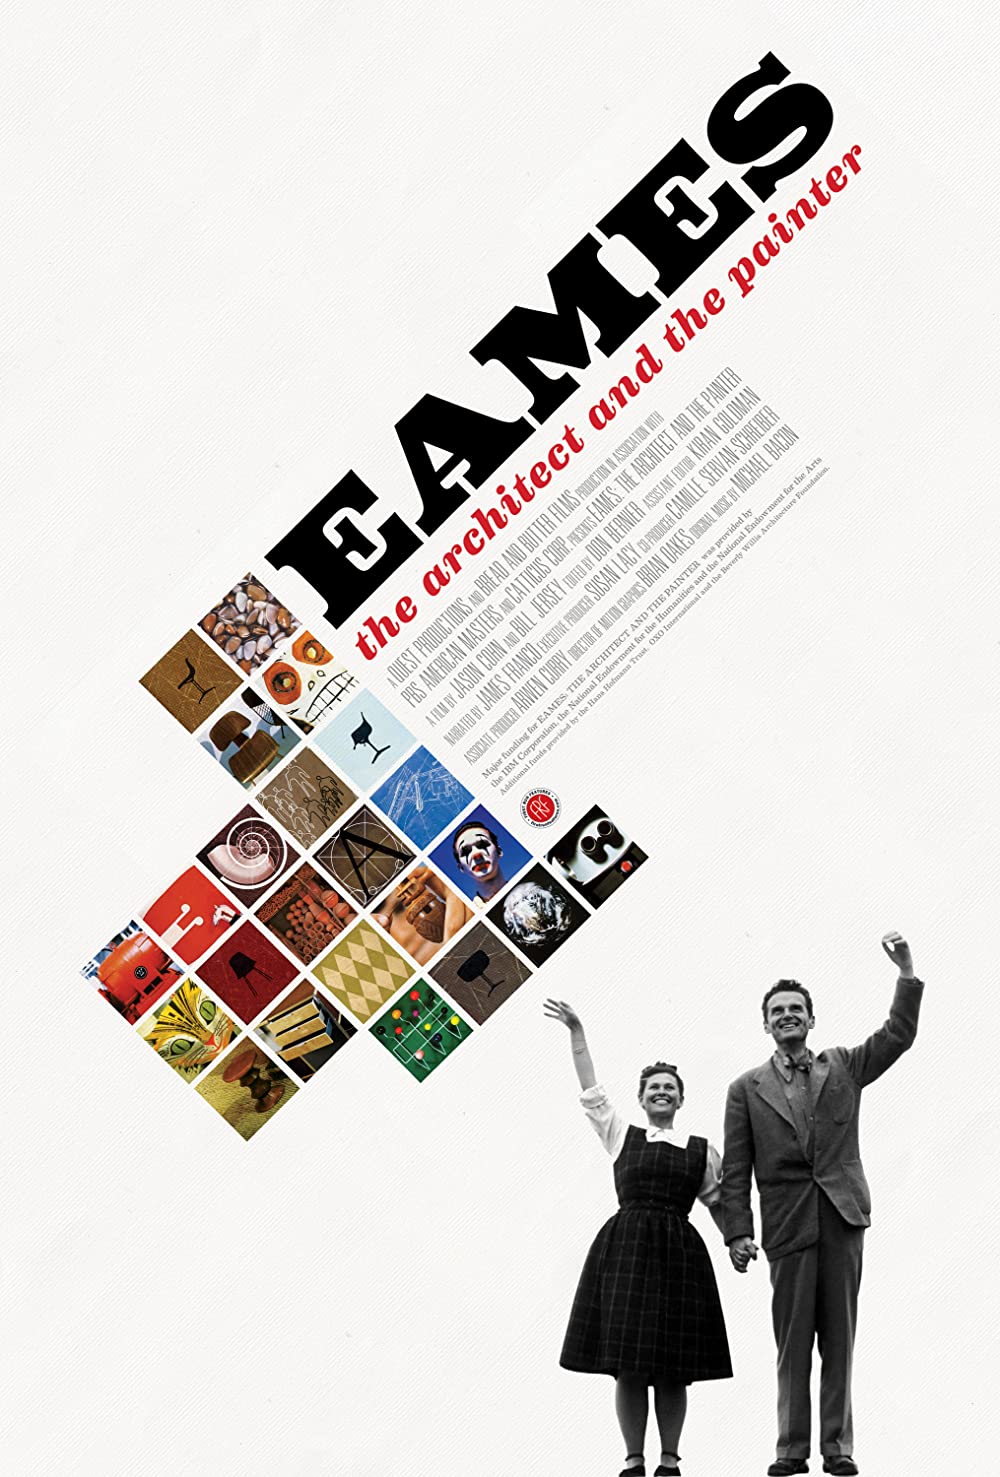 Filmbeschreibung zu Eames: The Architect & The Painter